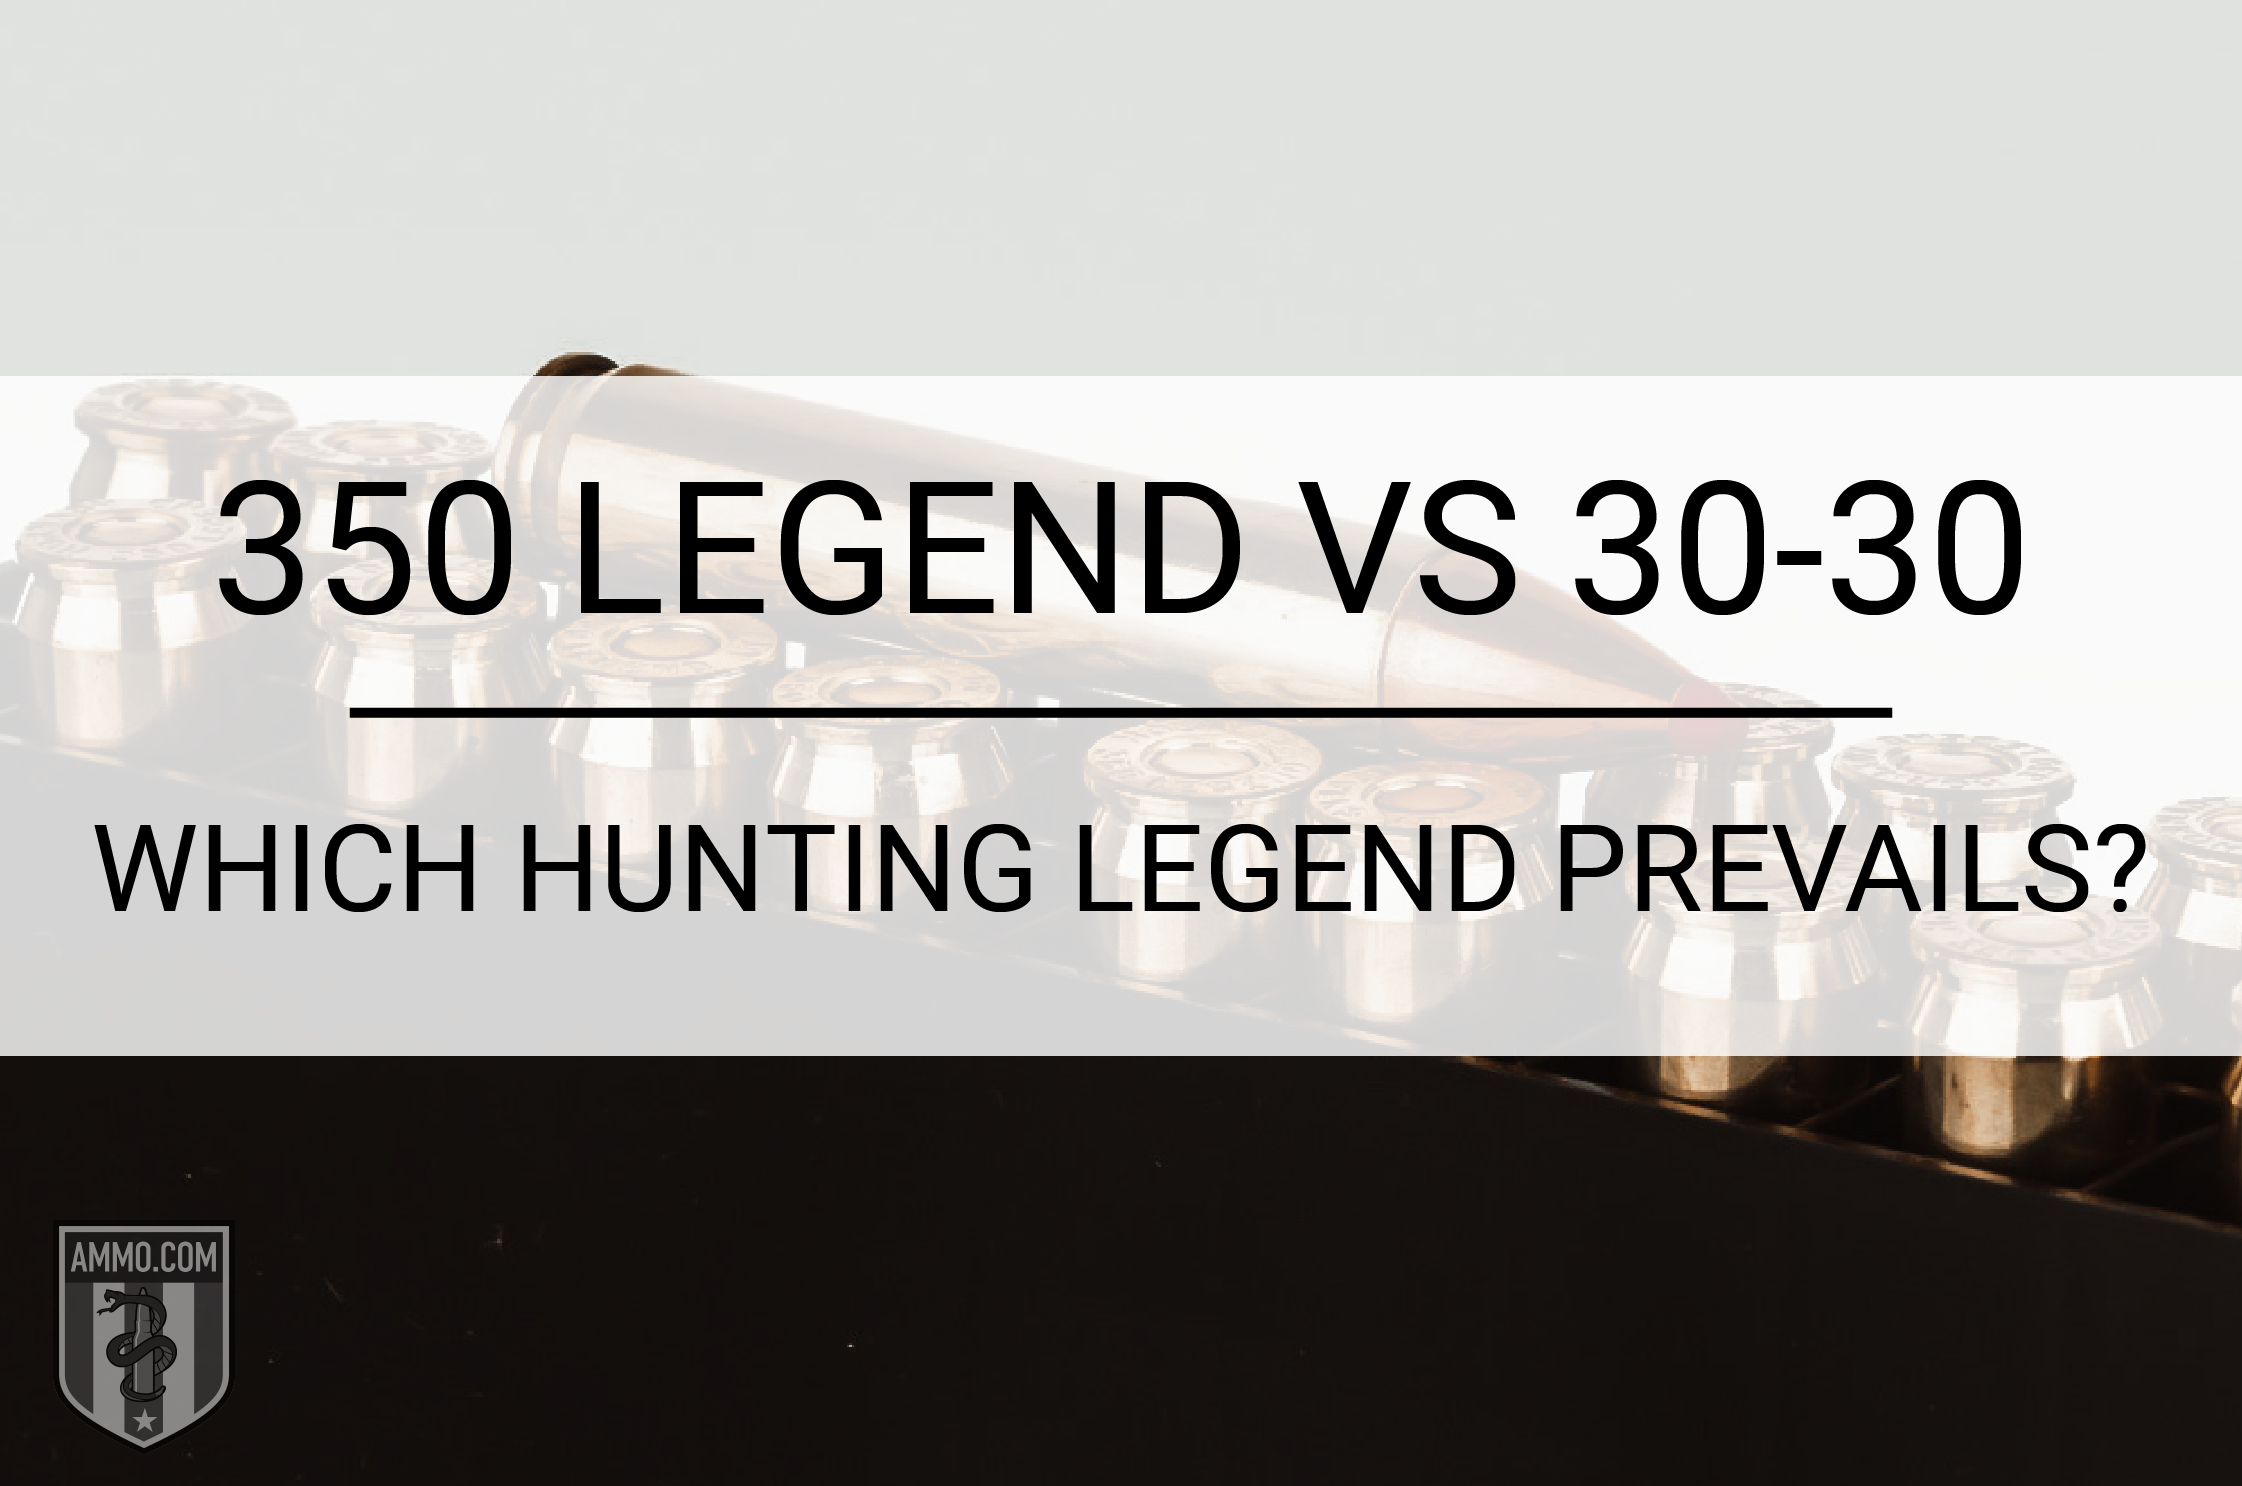 350 legend vs 30-30